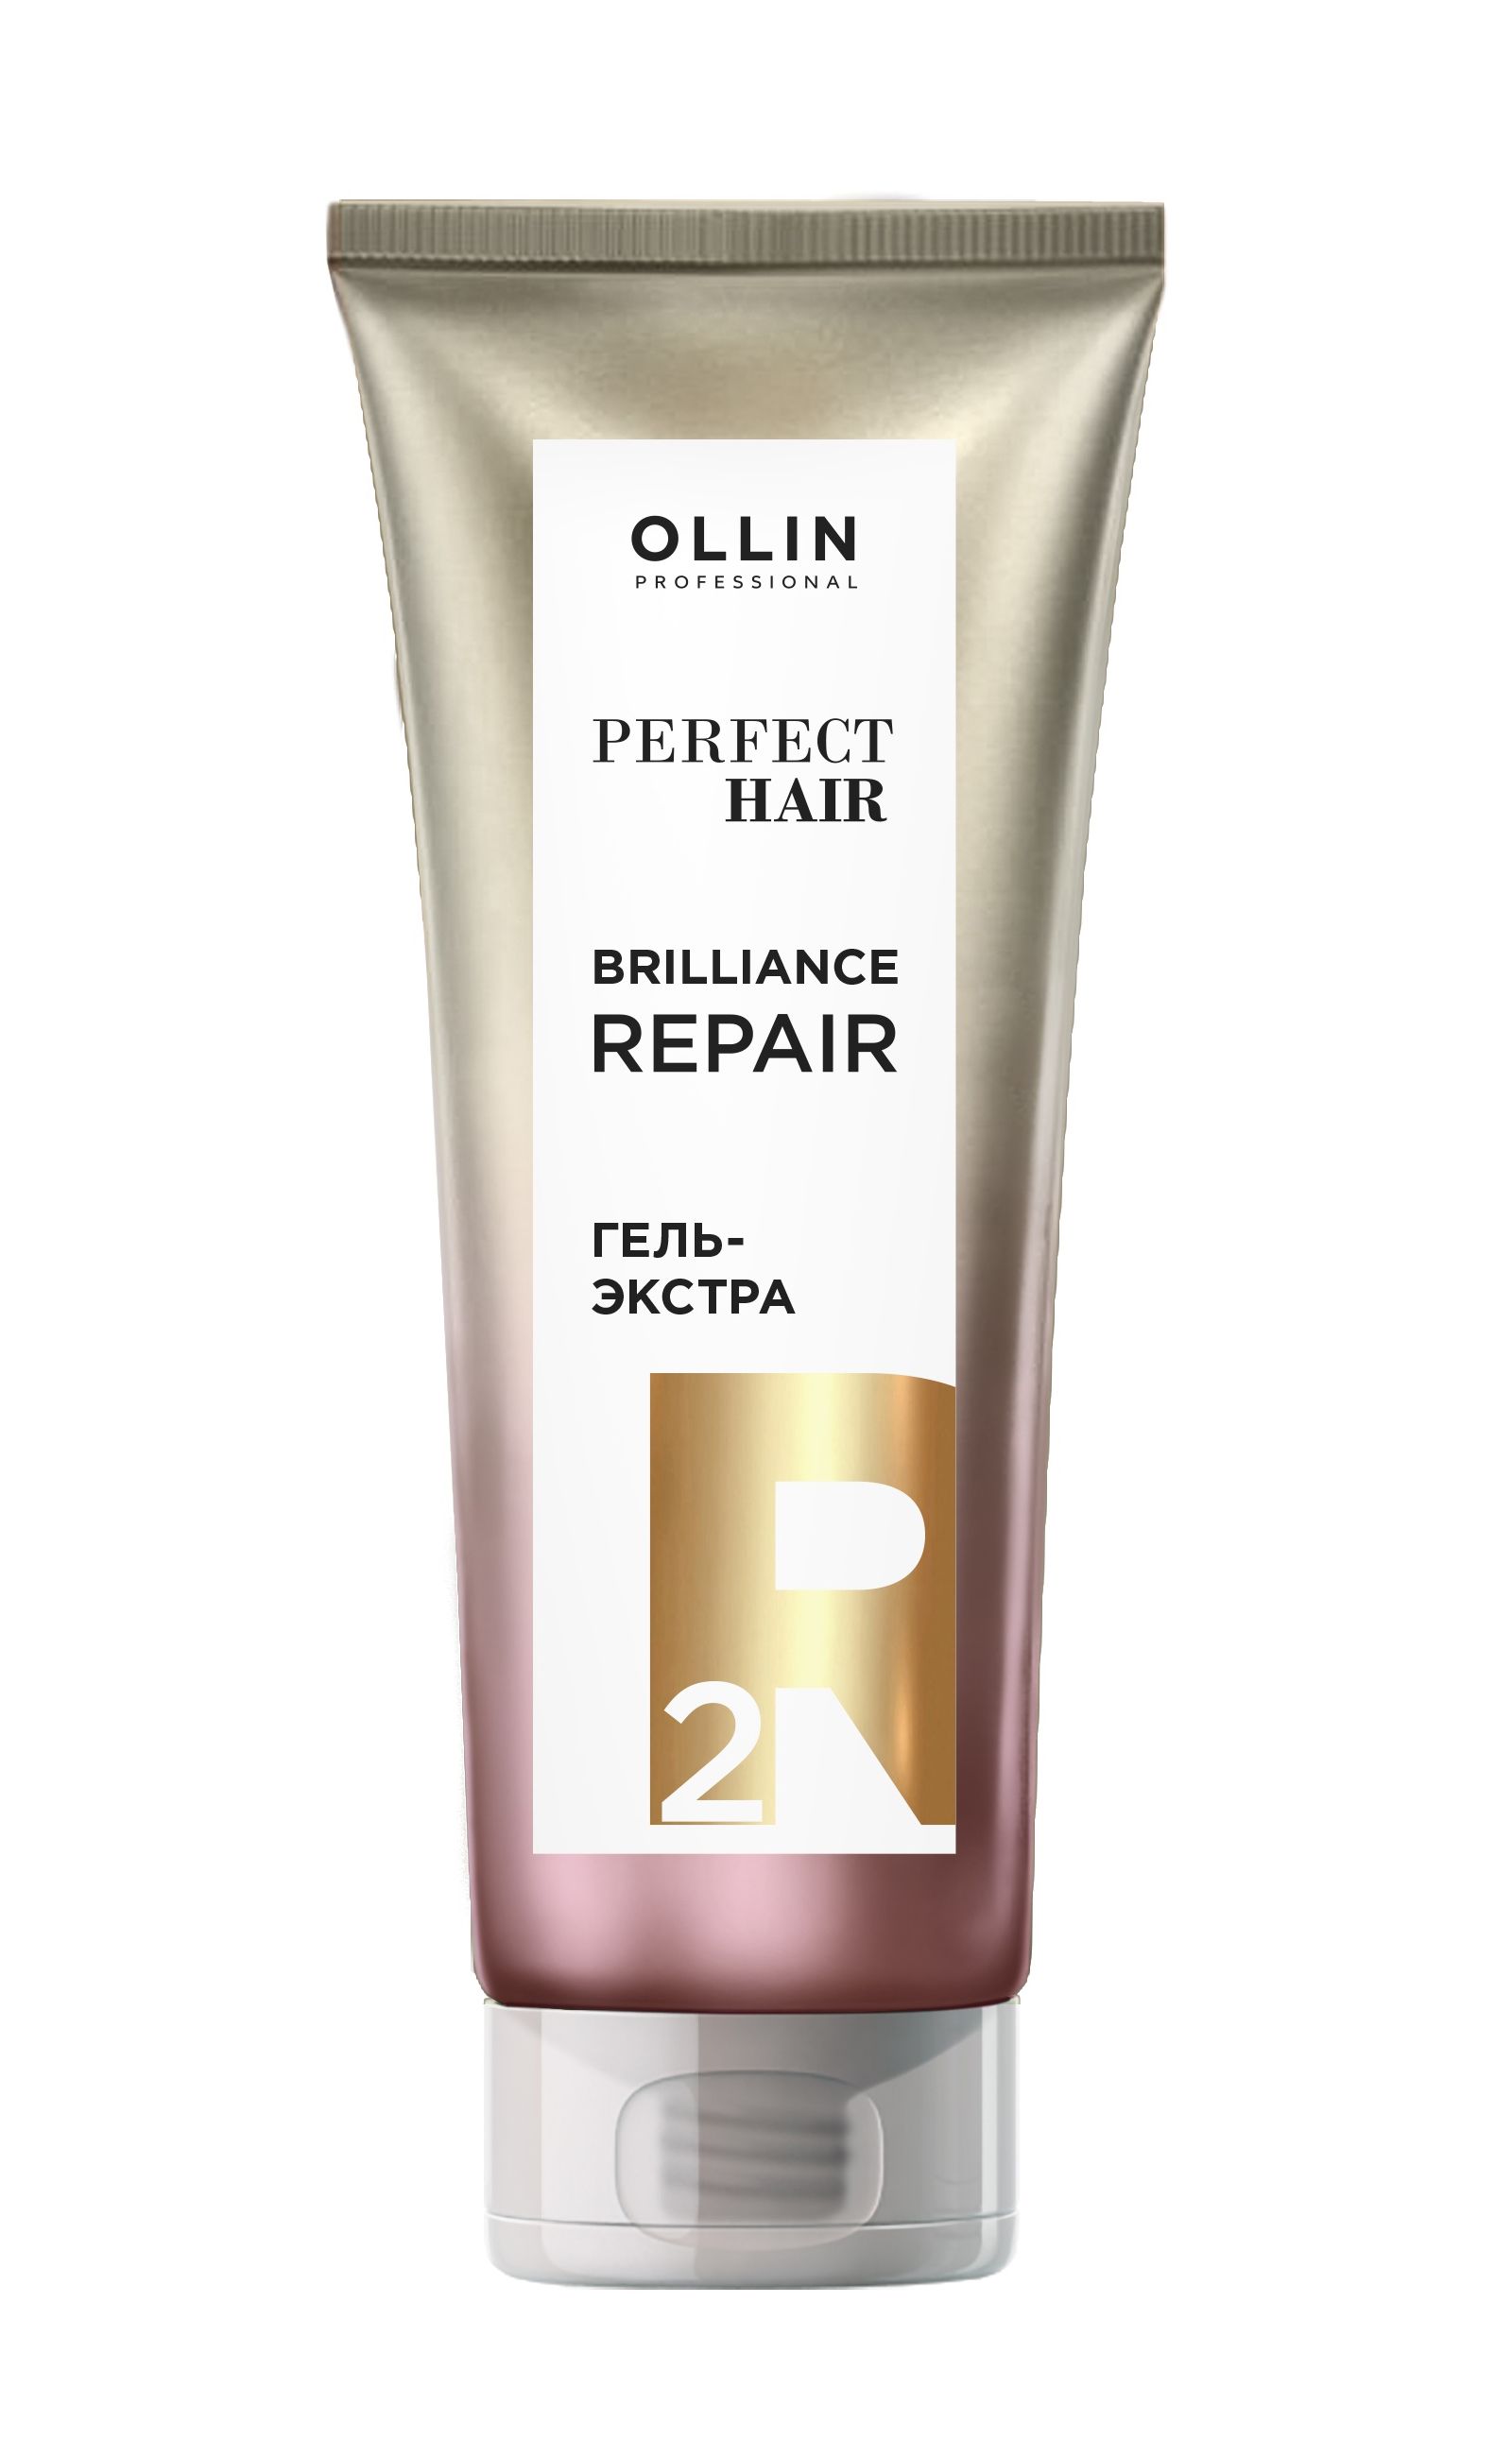 Ollin, Гель-экстра. Насыщающий этап «Brilliance Repair 2» серии «Perfect Hair», Фото интернет-магазин Премиум-Косметика.РФ